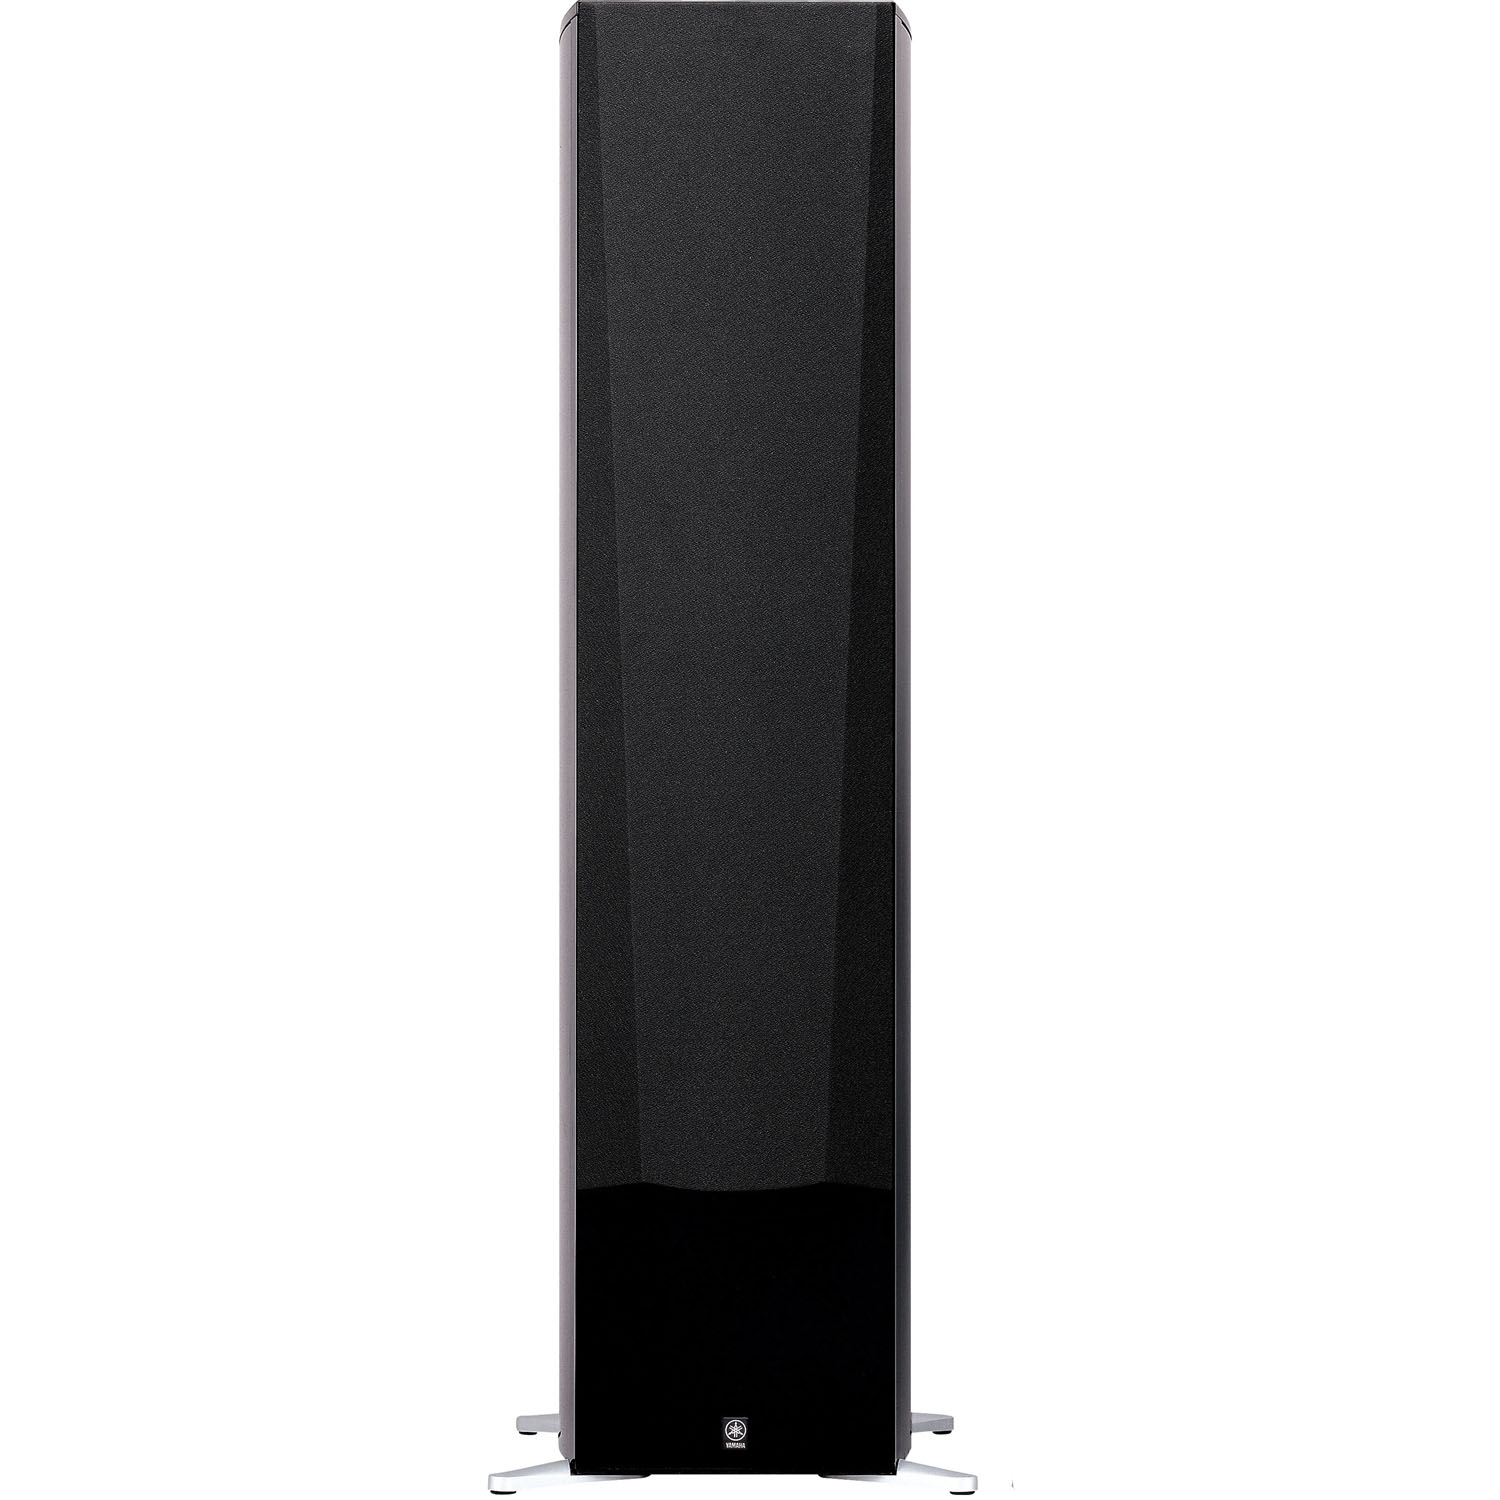 YAMAHA NS-777 3-Way Bass Reflex Tower Speaker Each (Black) - image 1 of 2